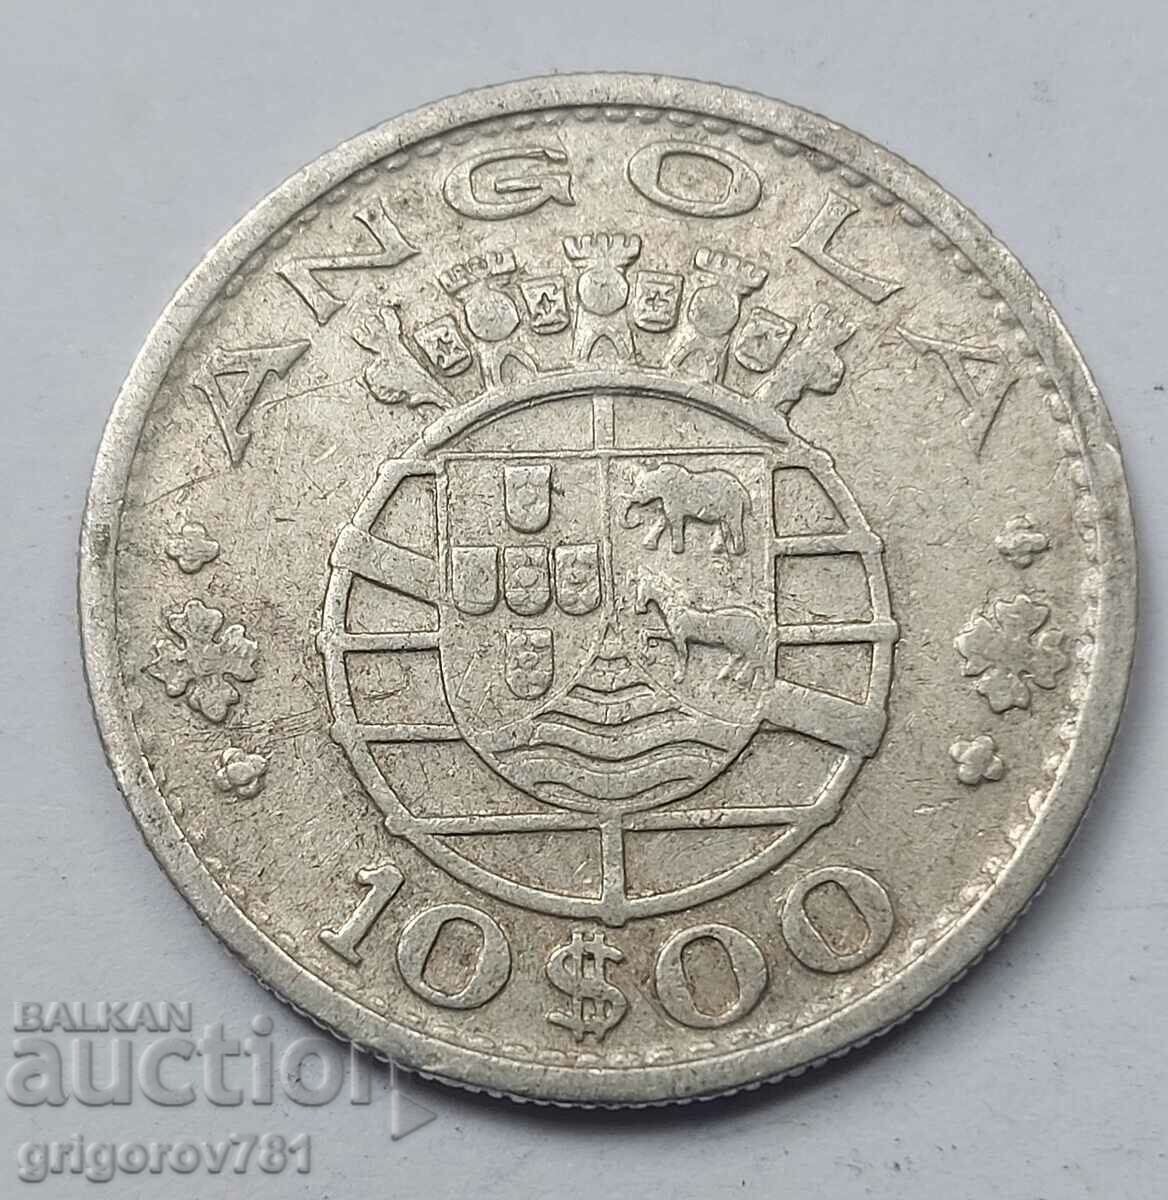 10 Escudo Silver Angola 1952 - Ασημένιο νόμισμα #9